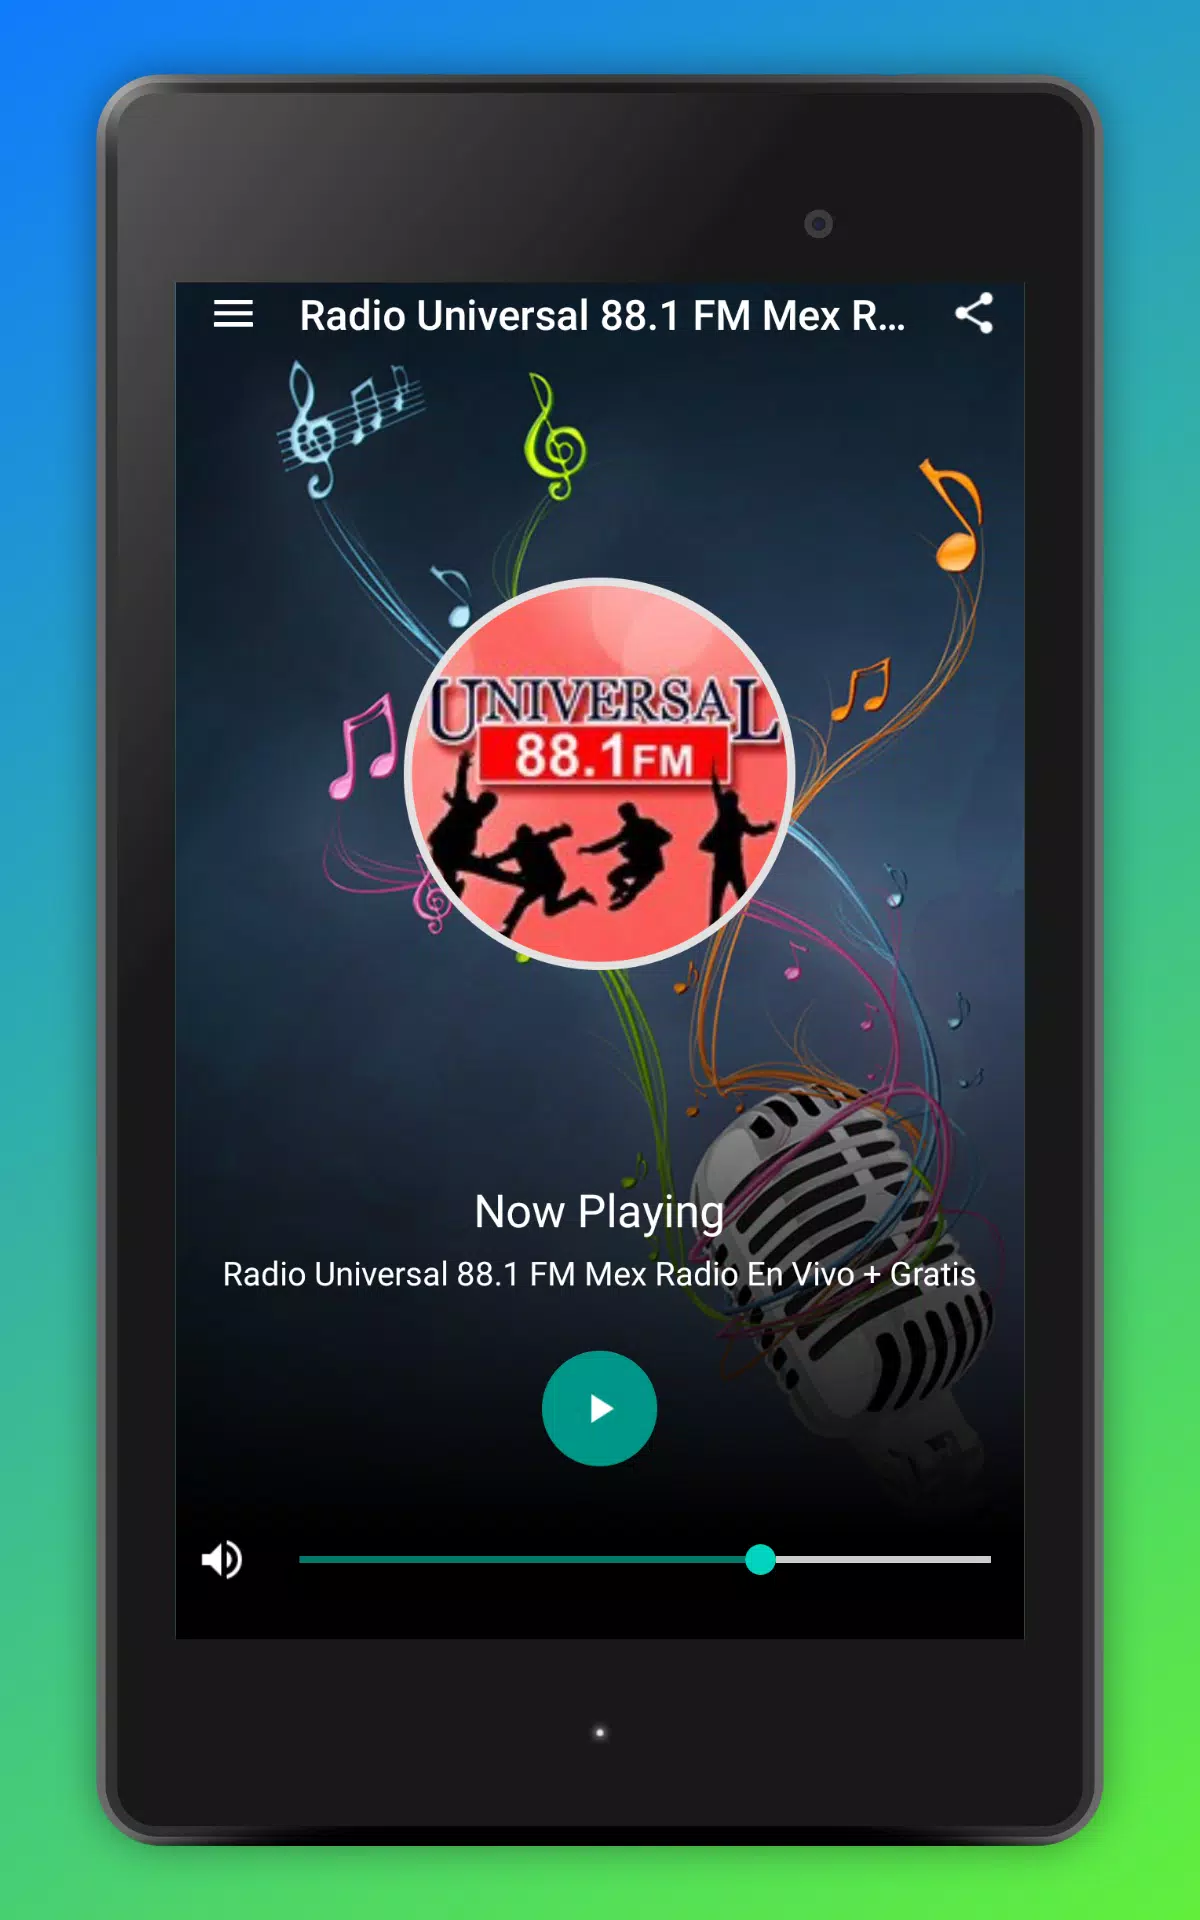 Radio Universal 88.1 FM Mex Radio En Vivo + Gratis APK for Android Download